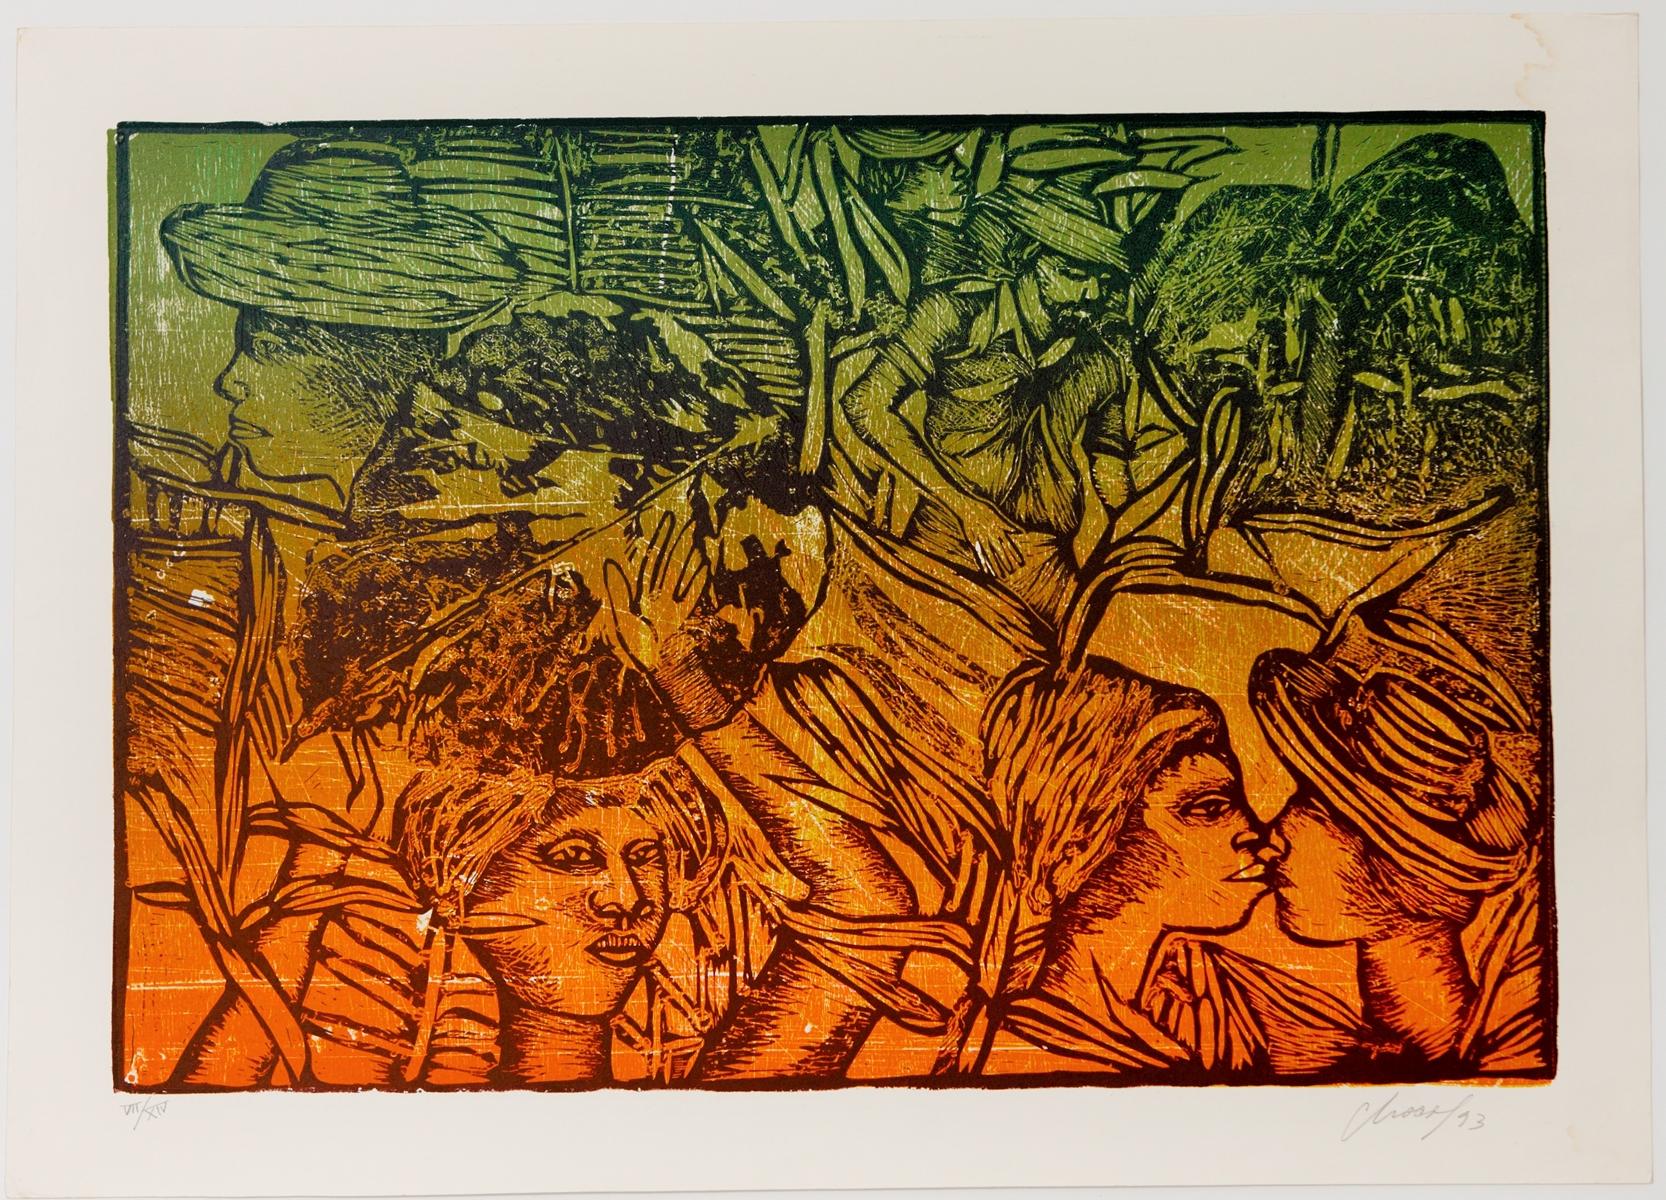 Eduardo ¨Choco¨ Roca Salazar (Cuba, 1949)
'Escena de campo', 1993
linocut on paper Canson 320 g.
16.8 x 23 in. (42.5 x 58.3 cm.)
Edition of 14
ID: CHO-307
Unframed